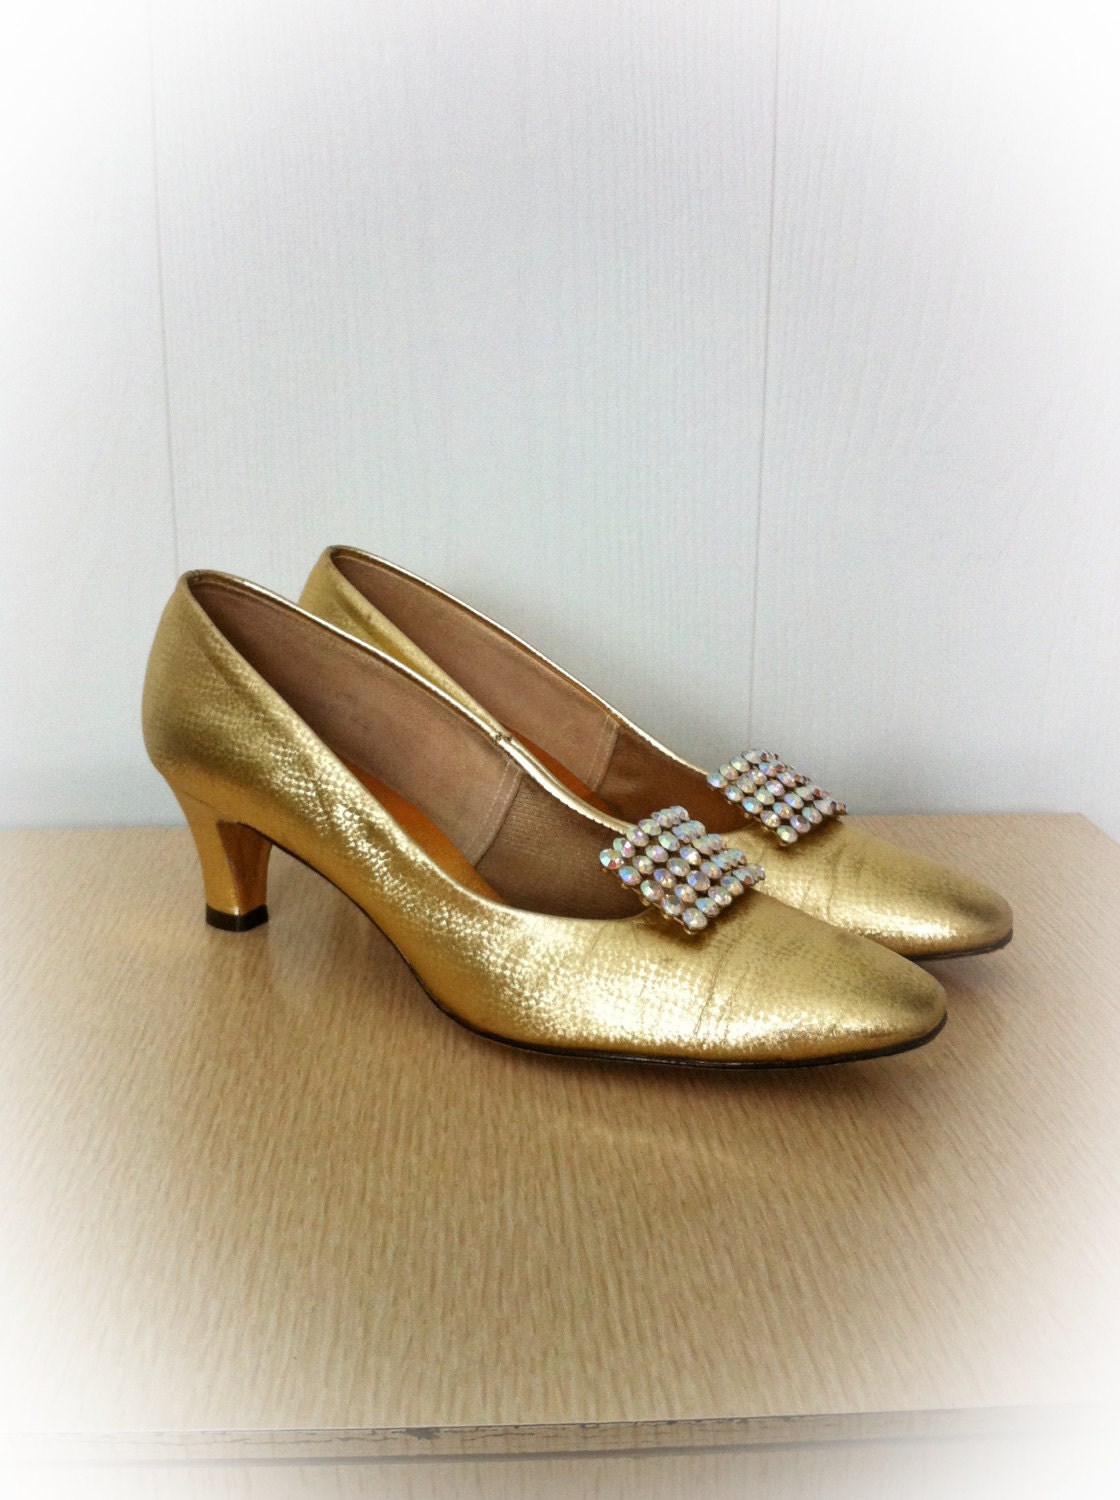 Vintage 1970s Shoes Gold Miss Wonderful High Heels with Rhinestone ...